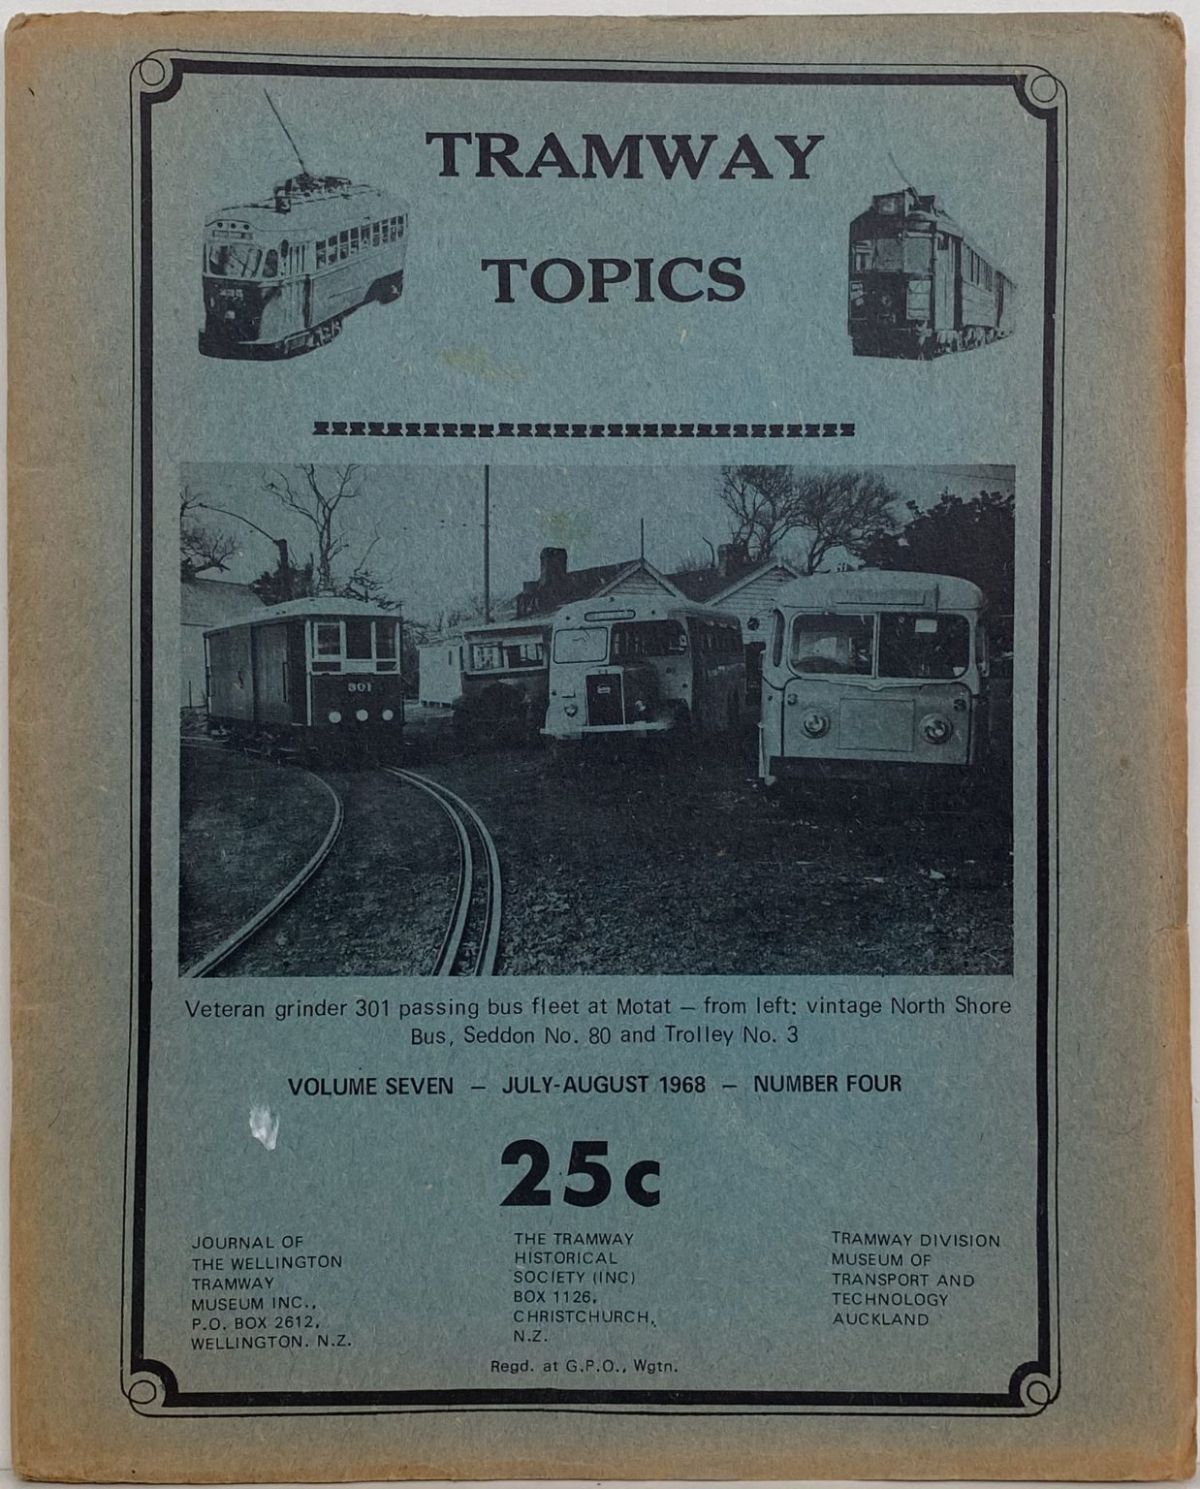 TRAMWAY TOPICS Vol 7, No 4, July- August 1968